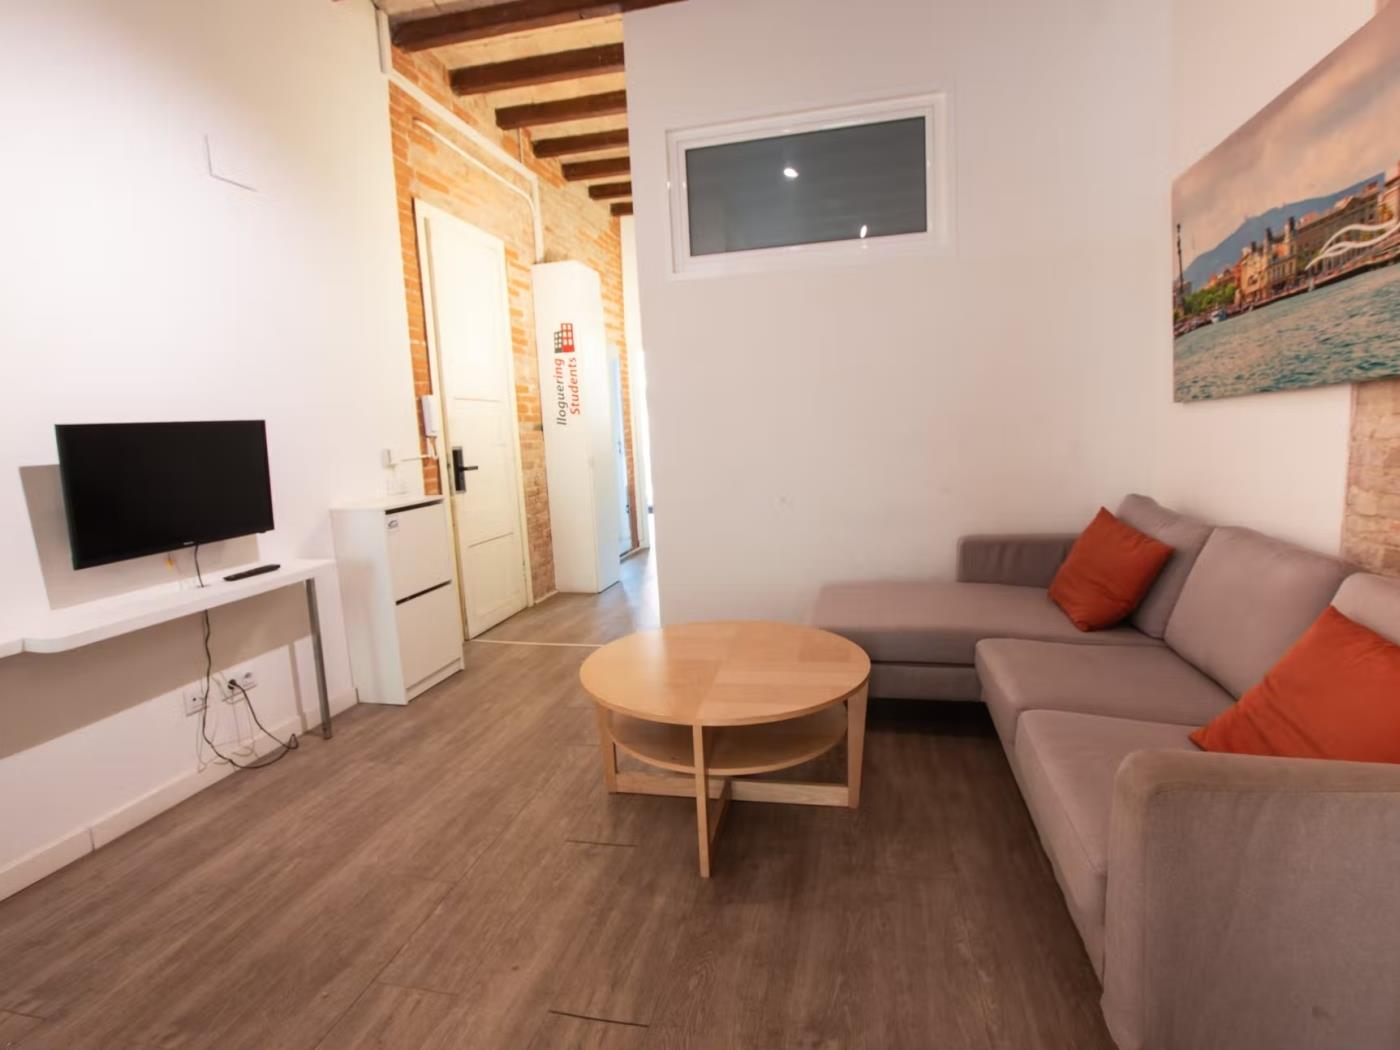 Bel appartement en colocation avec des chambres individuelles lumineuses - My Space Barcelona Capital Appartements